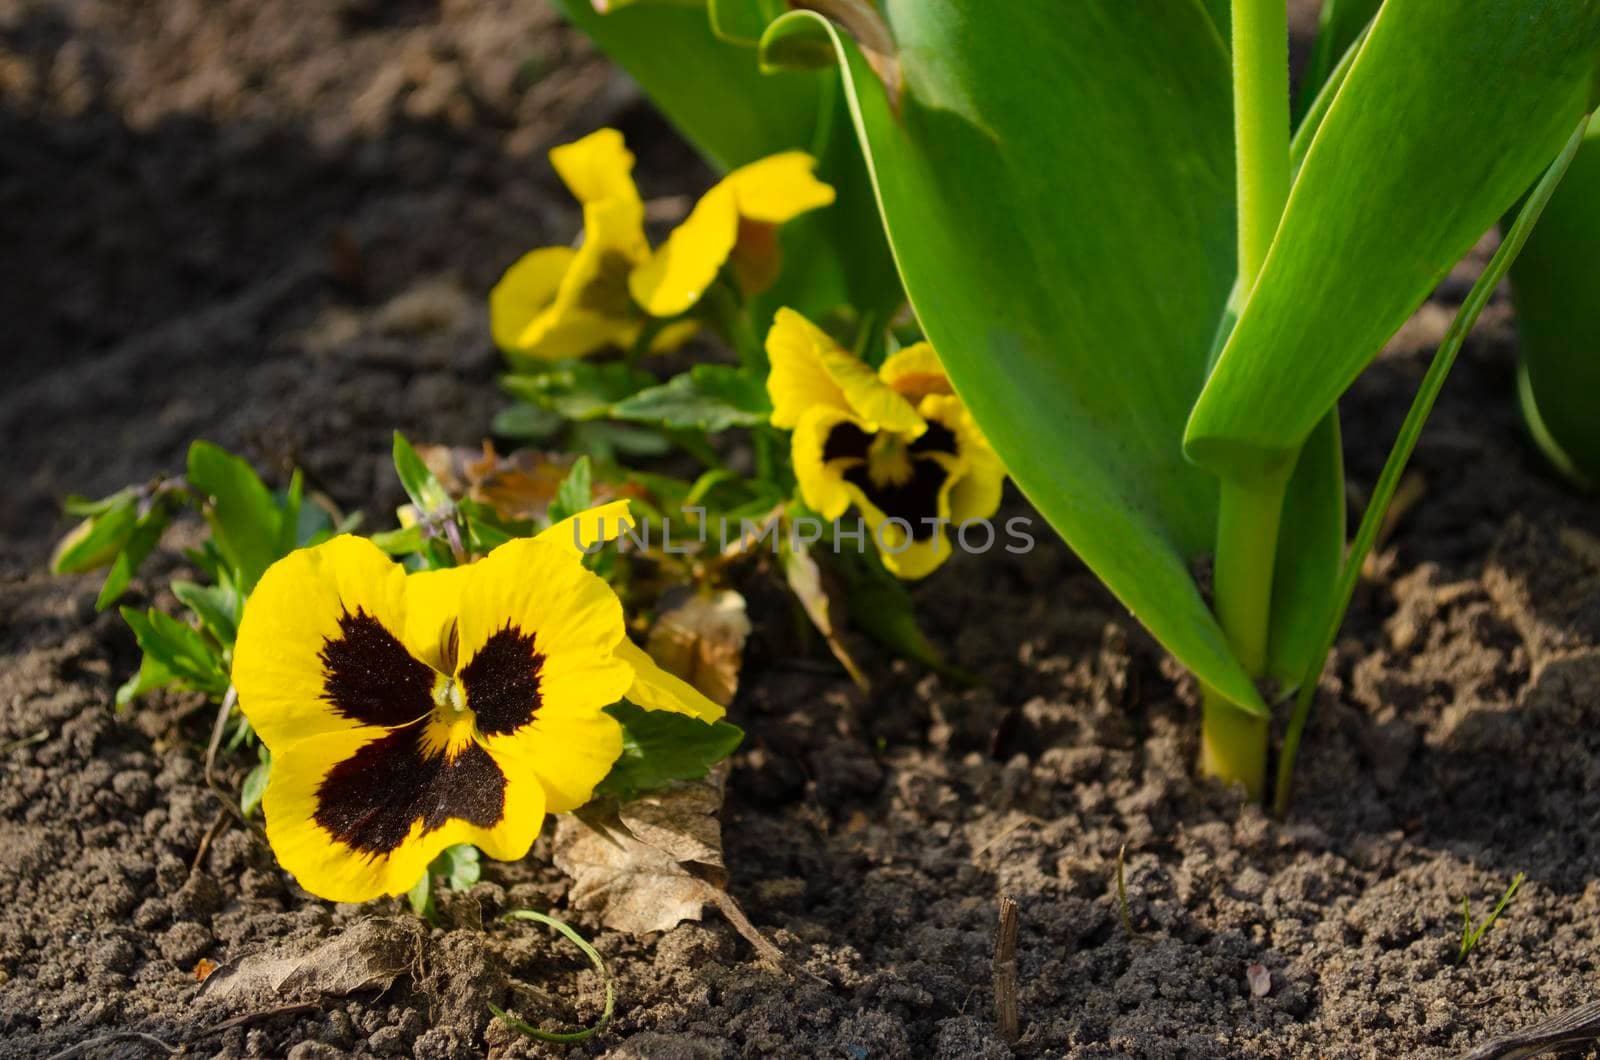 Yellow black pansy flower, sharp close up view, city gardening